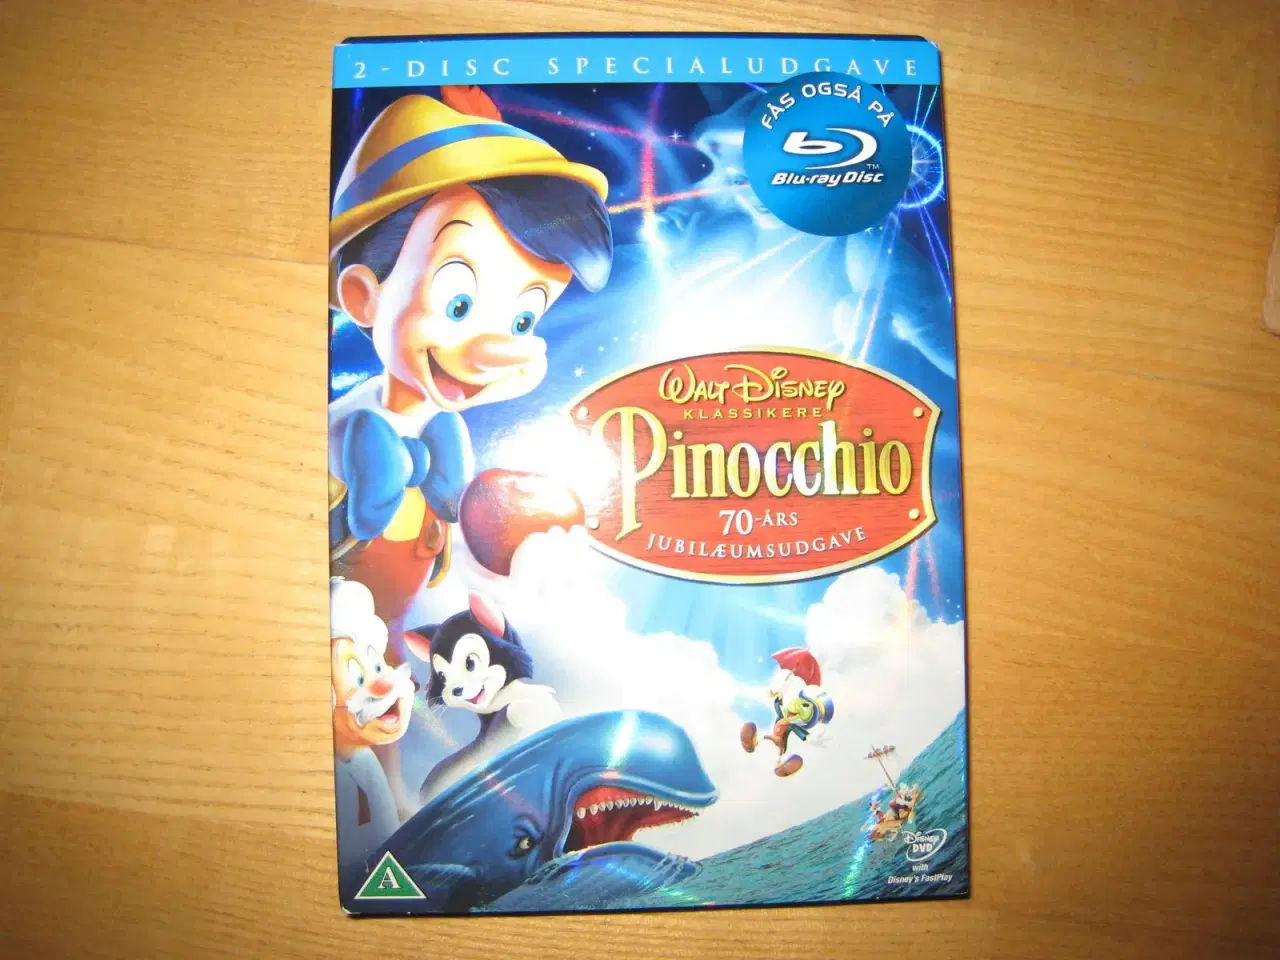 Billede 1 - Pinocchio 70 års jubilæum udgave